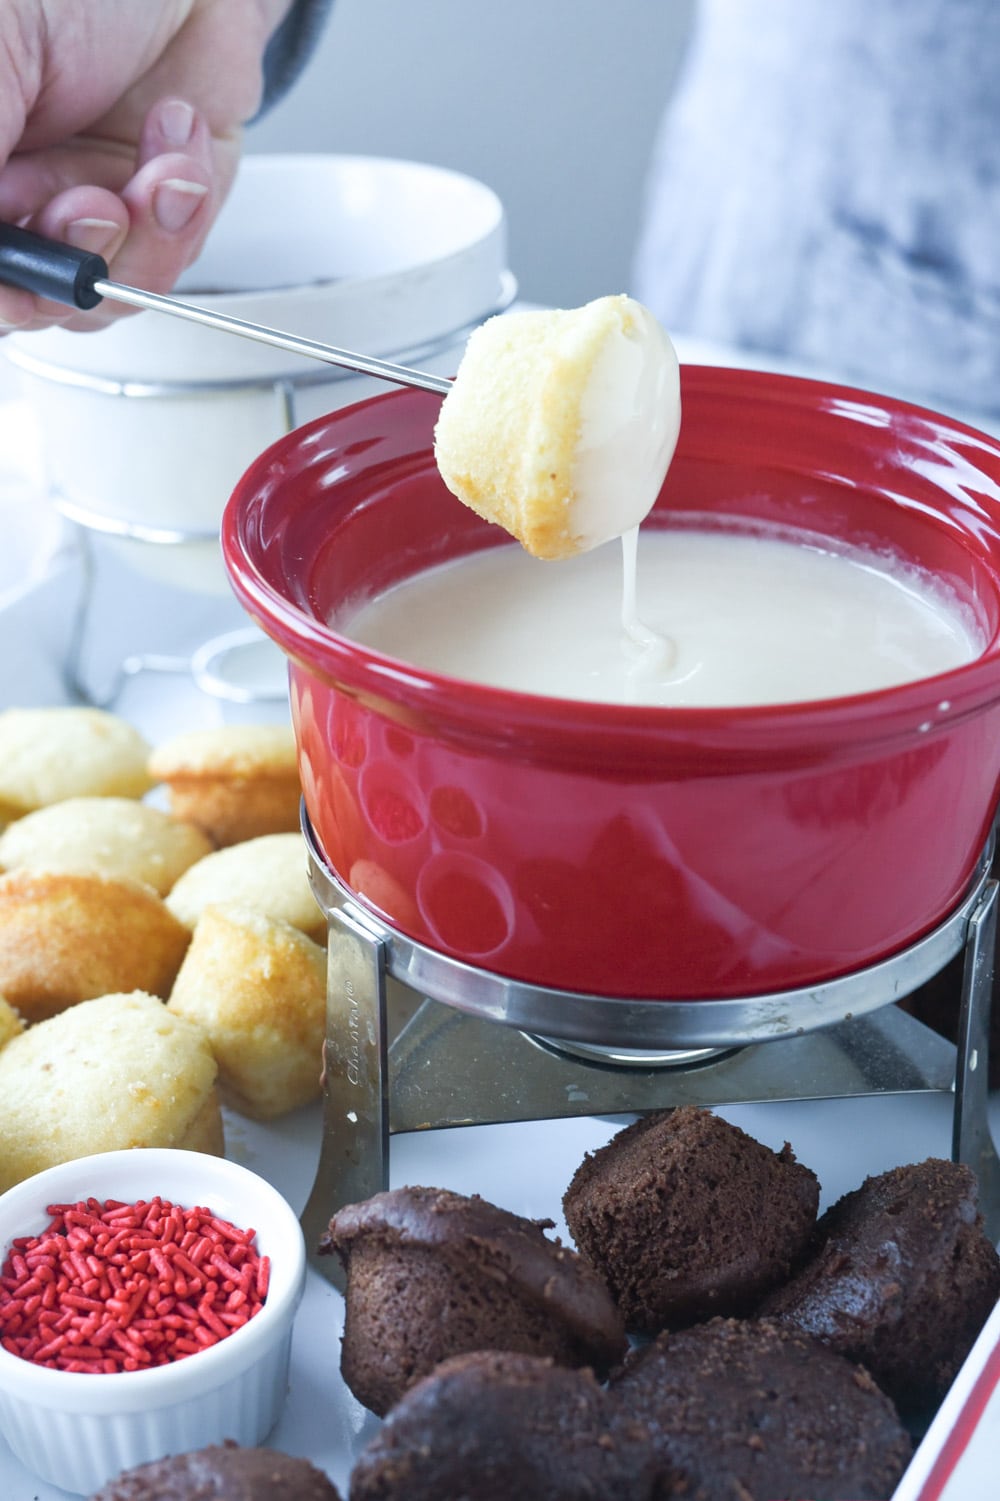 dipping cupcake into chocolate fondue